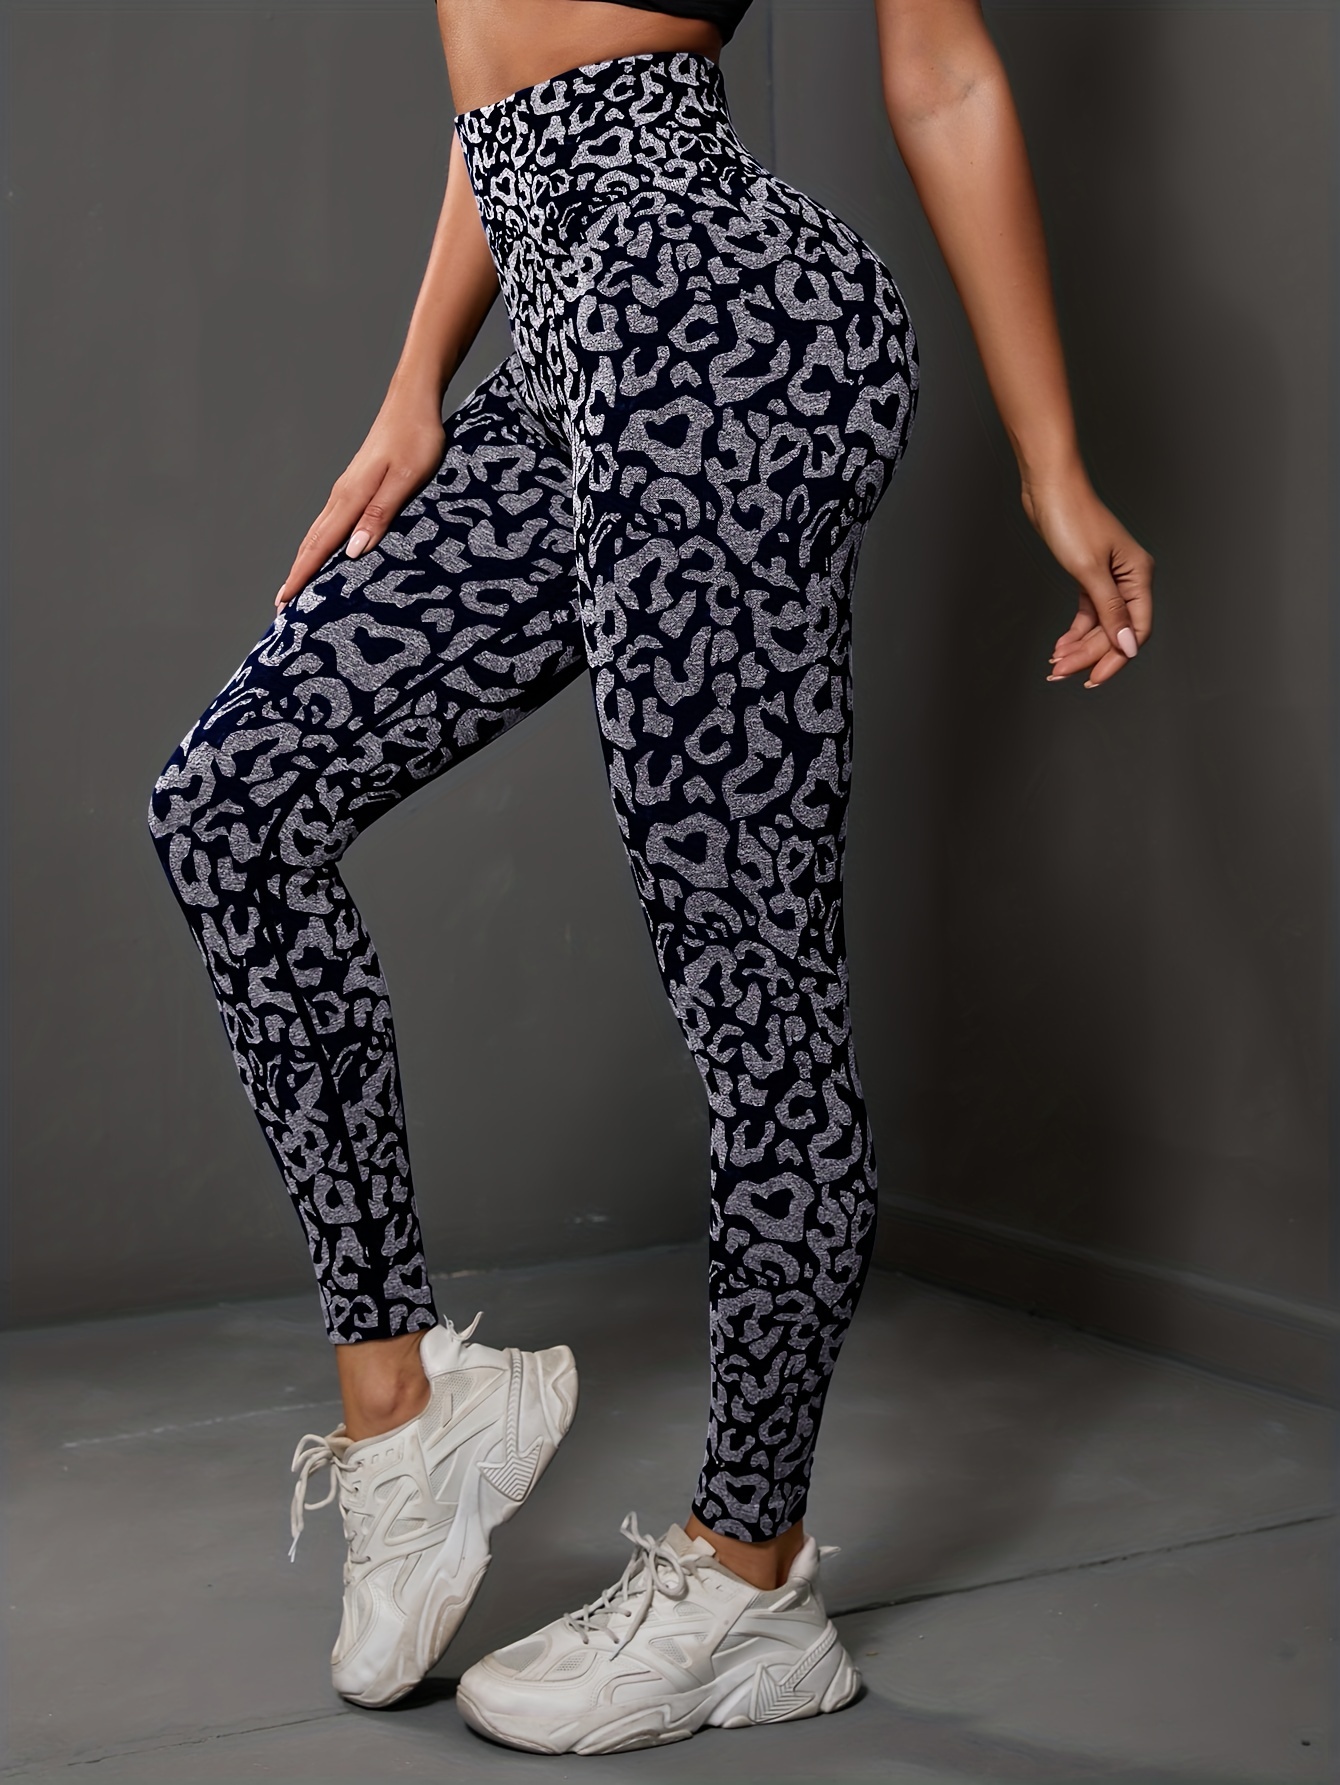 GUESS Women's Leopard Print Super Stretch Leggings – Light Gray